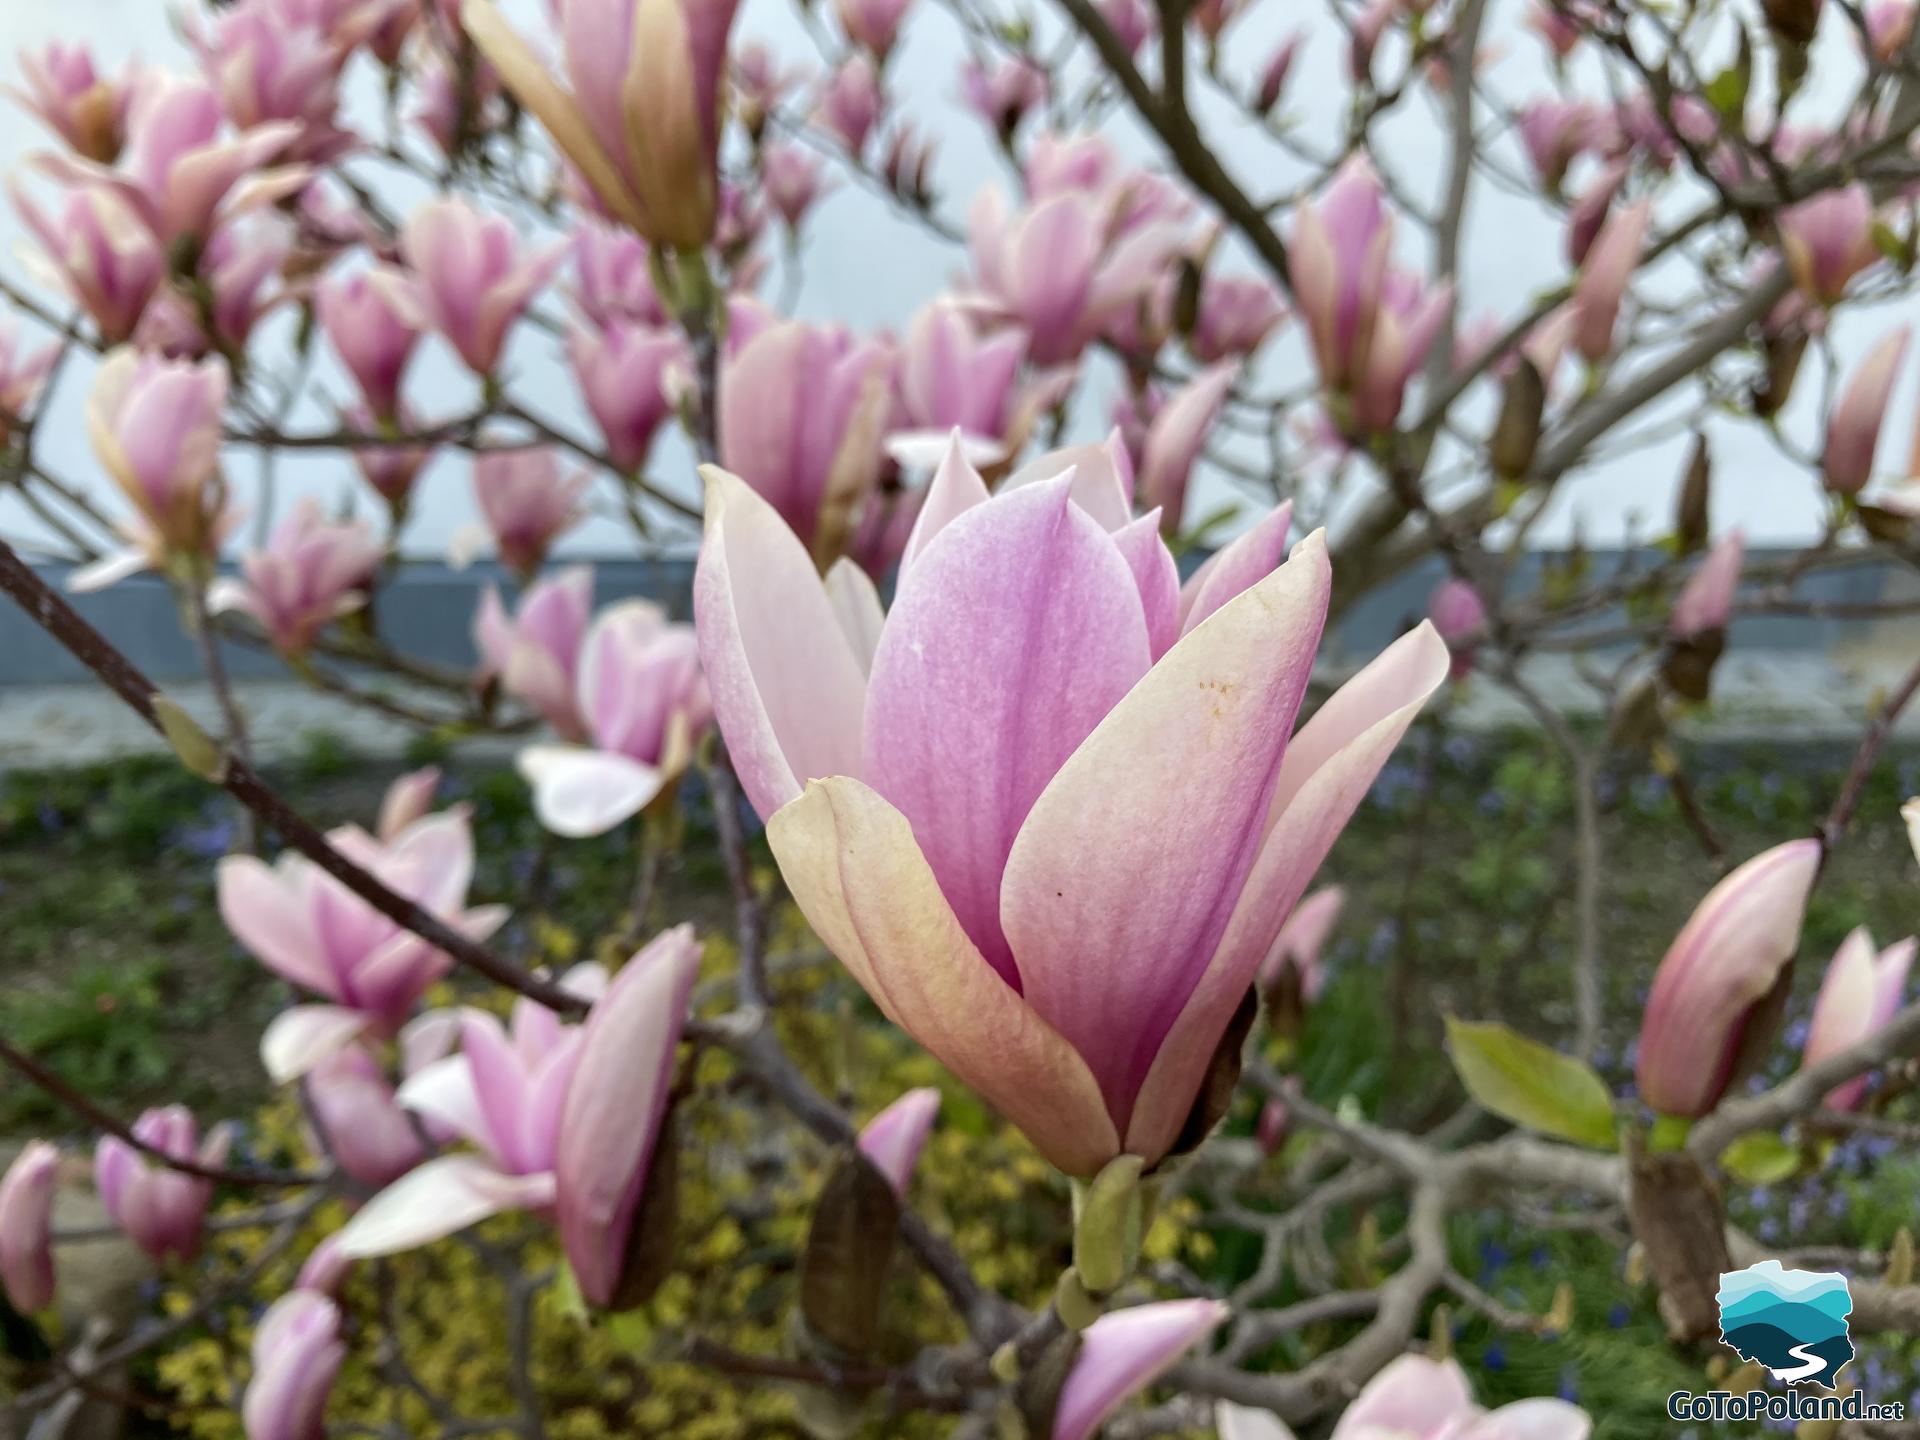 Pink magnolia flowers on the bush